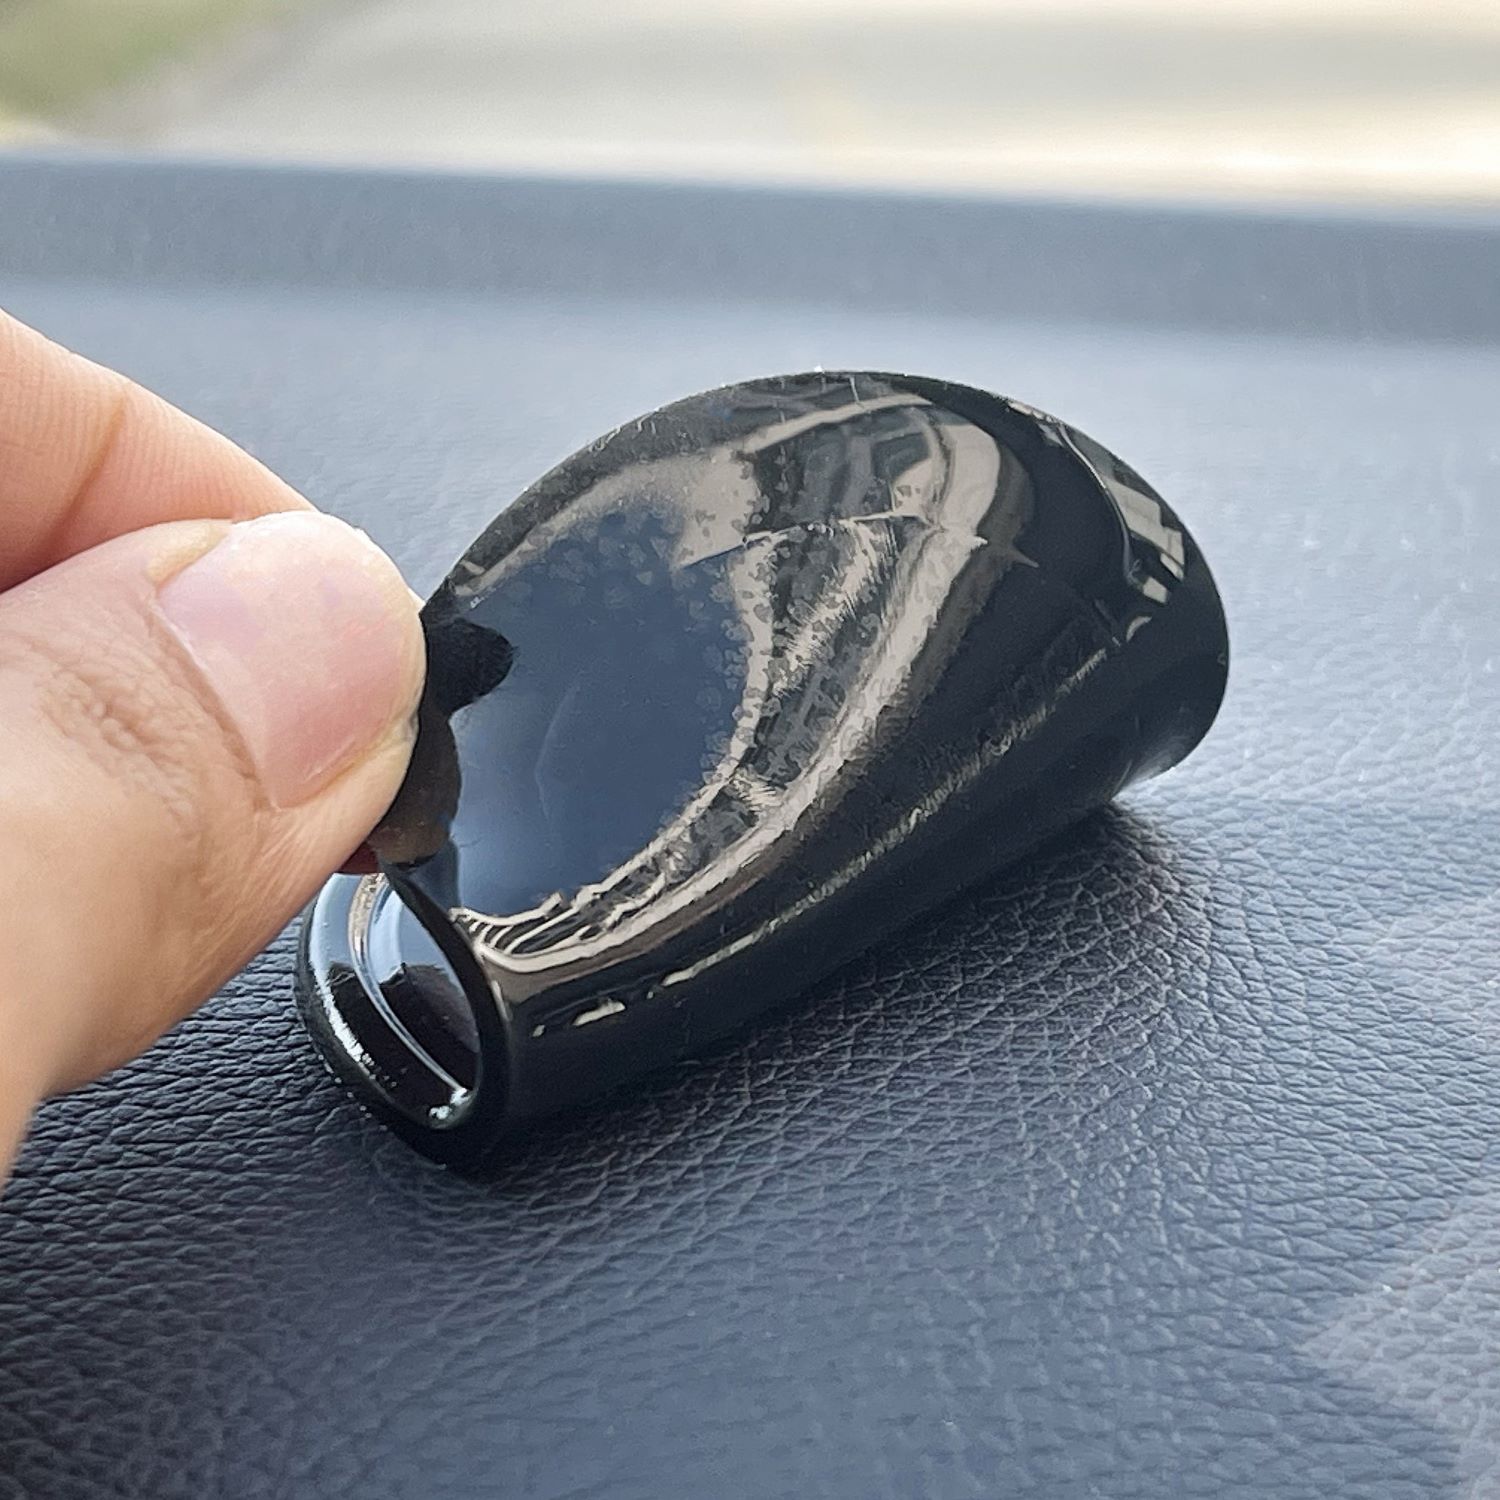 Non Slip Sticky Gel Pad for Car Dashboard, Anti Slip Grip Mat for Cell Phone, Radar Detector, Tablet, GPS, Keys or Sunglasses, Small Round 6*6cm